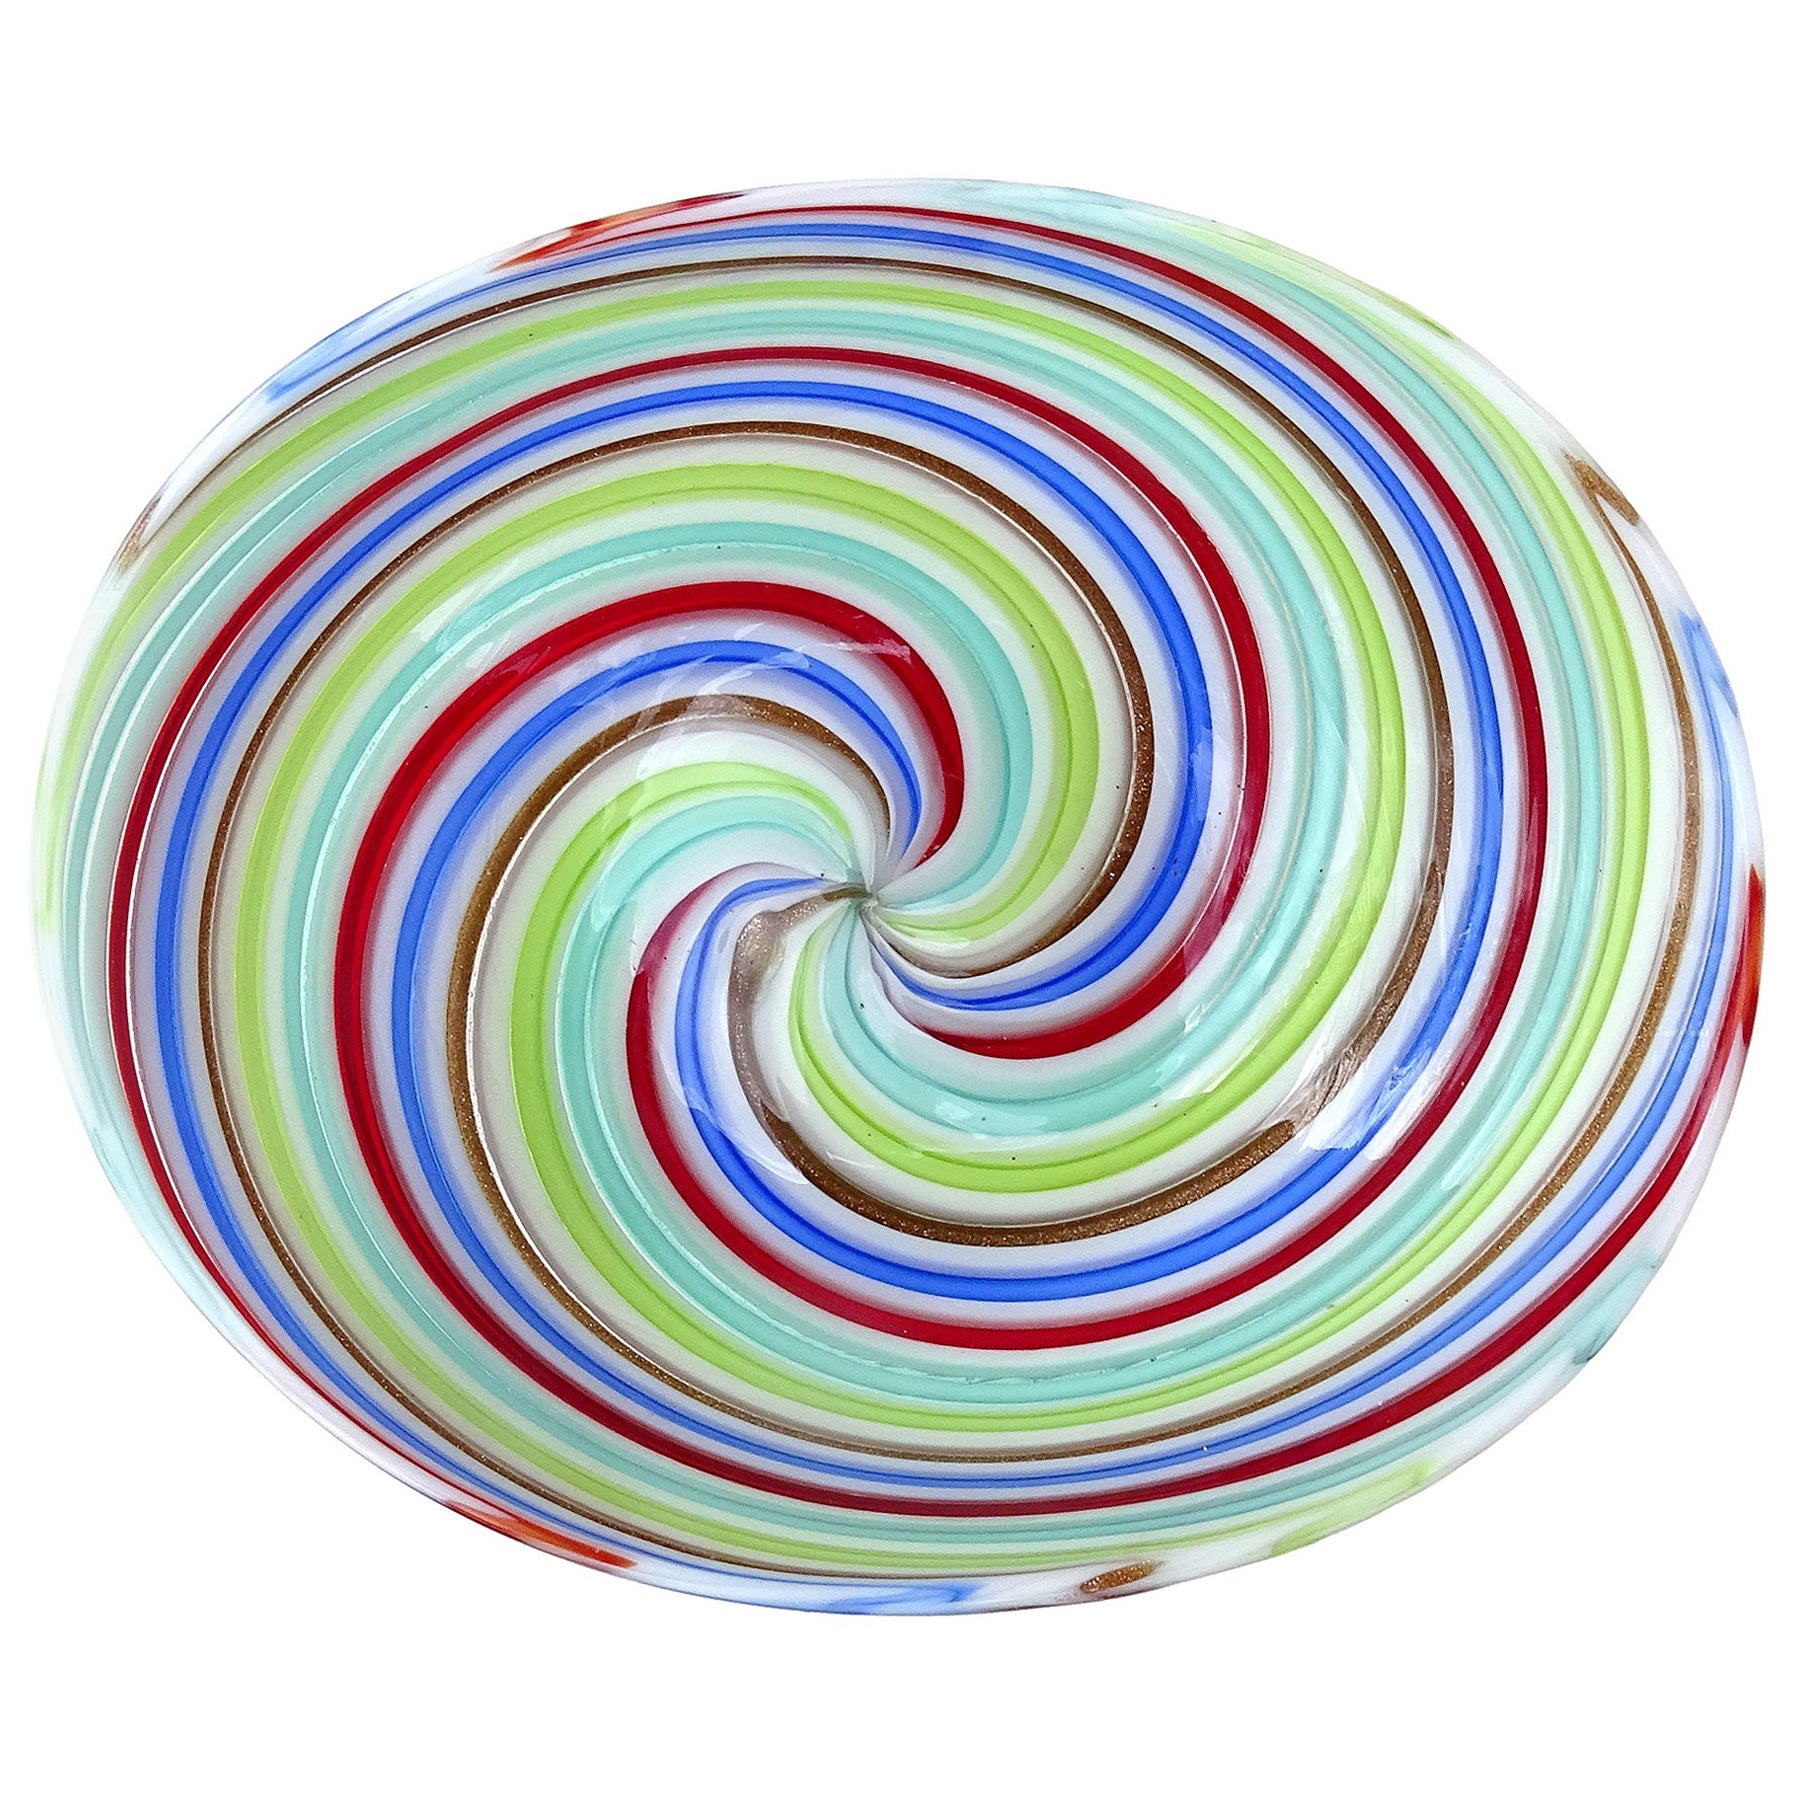 Dino Martens plat à rubans en verre d'art italien de Murano blanc, rouge, bleu et aventurine